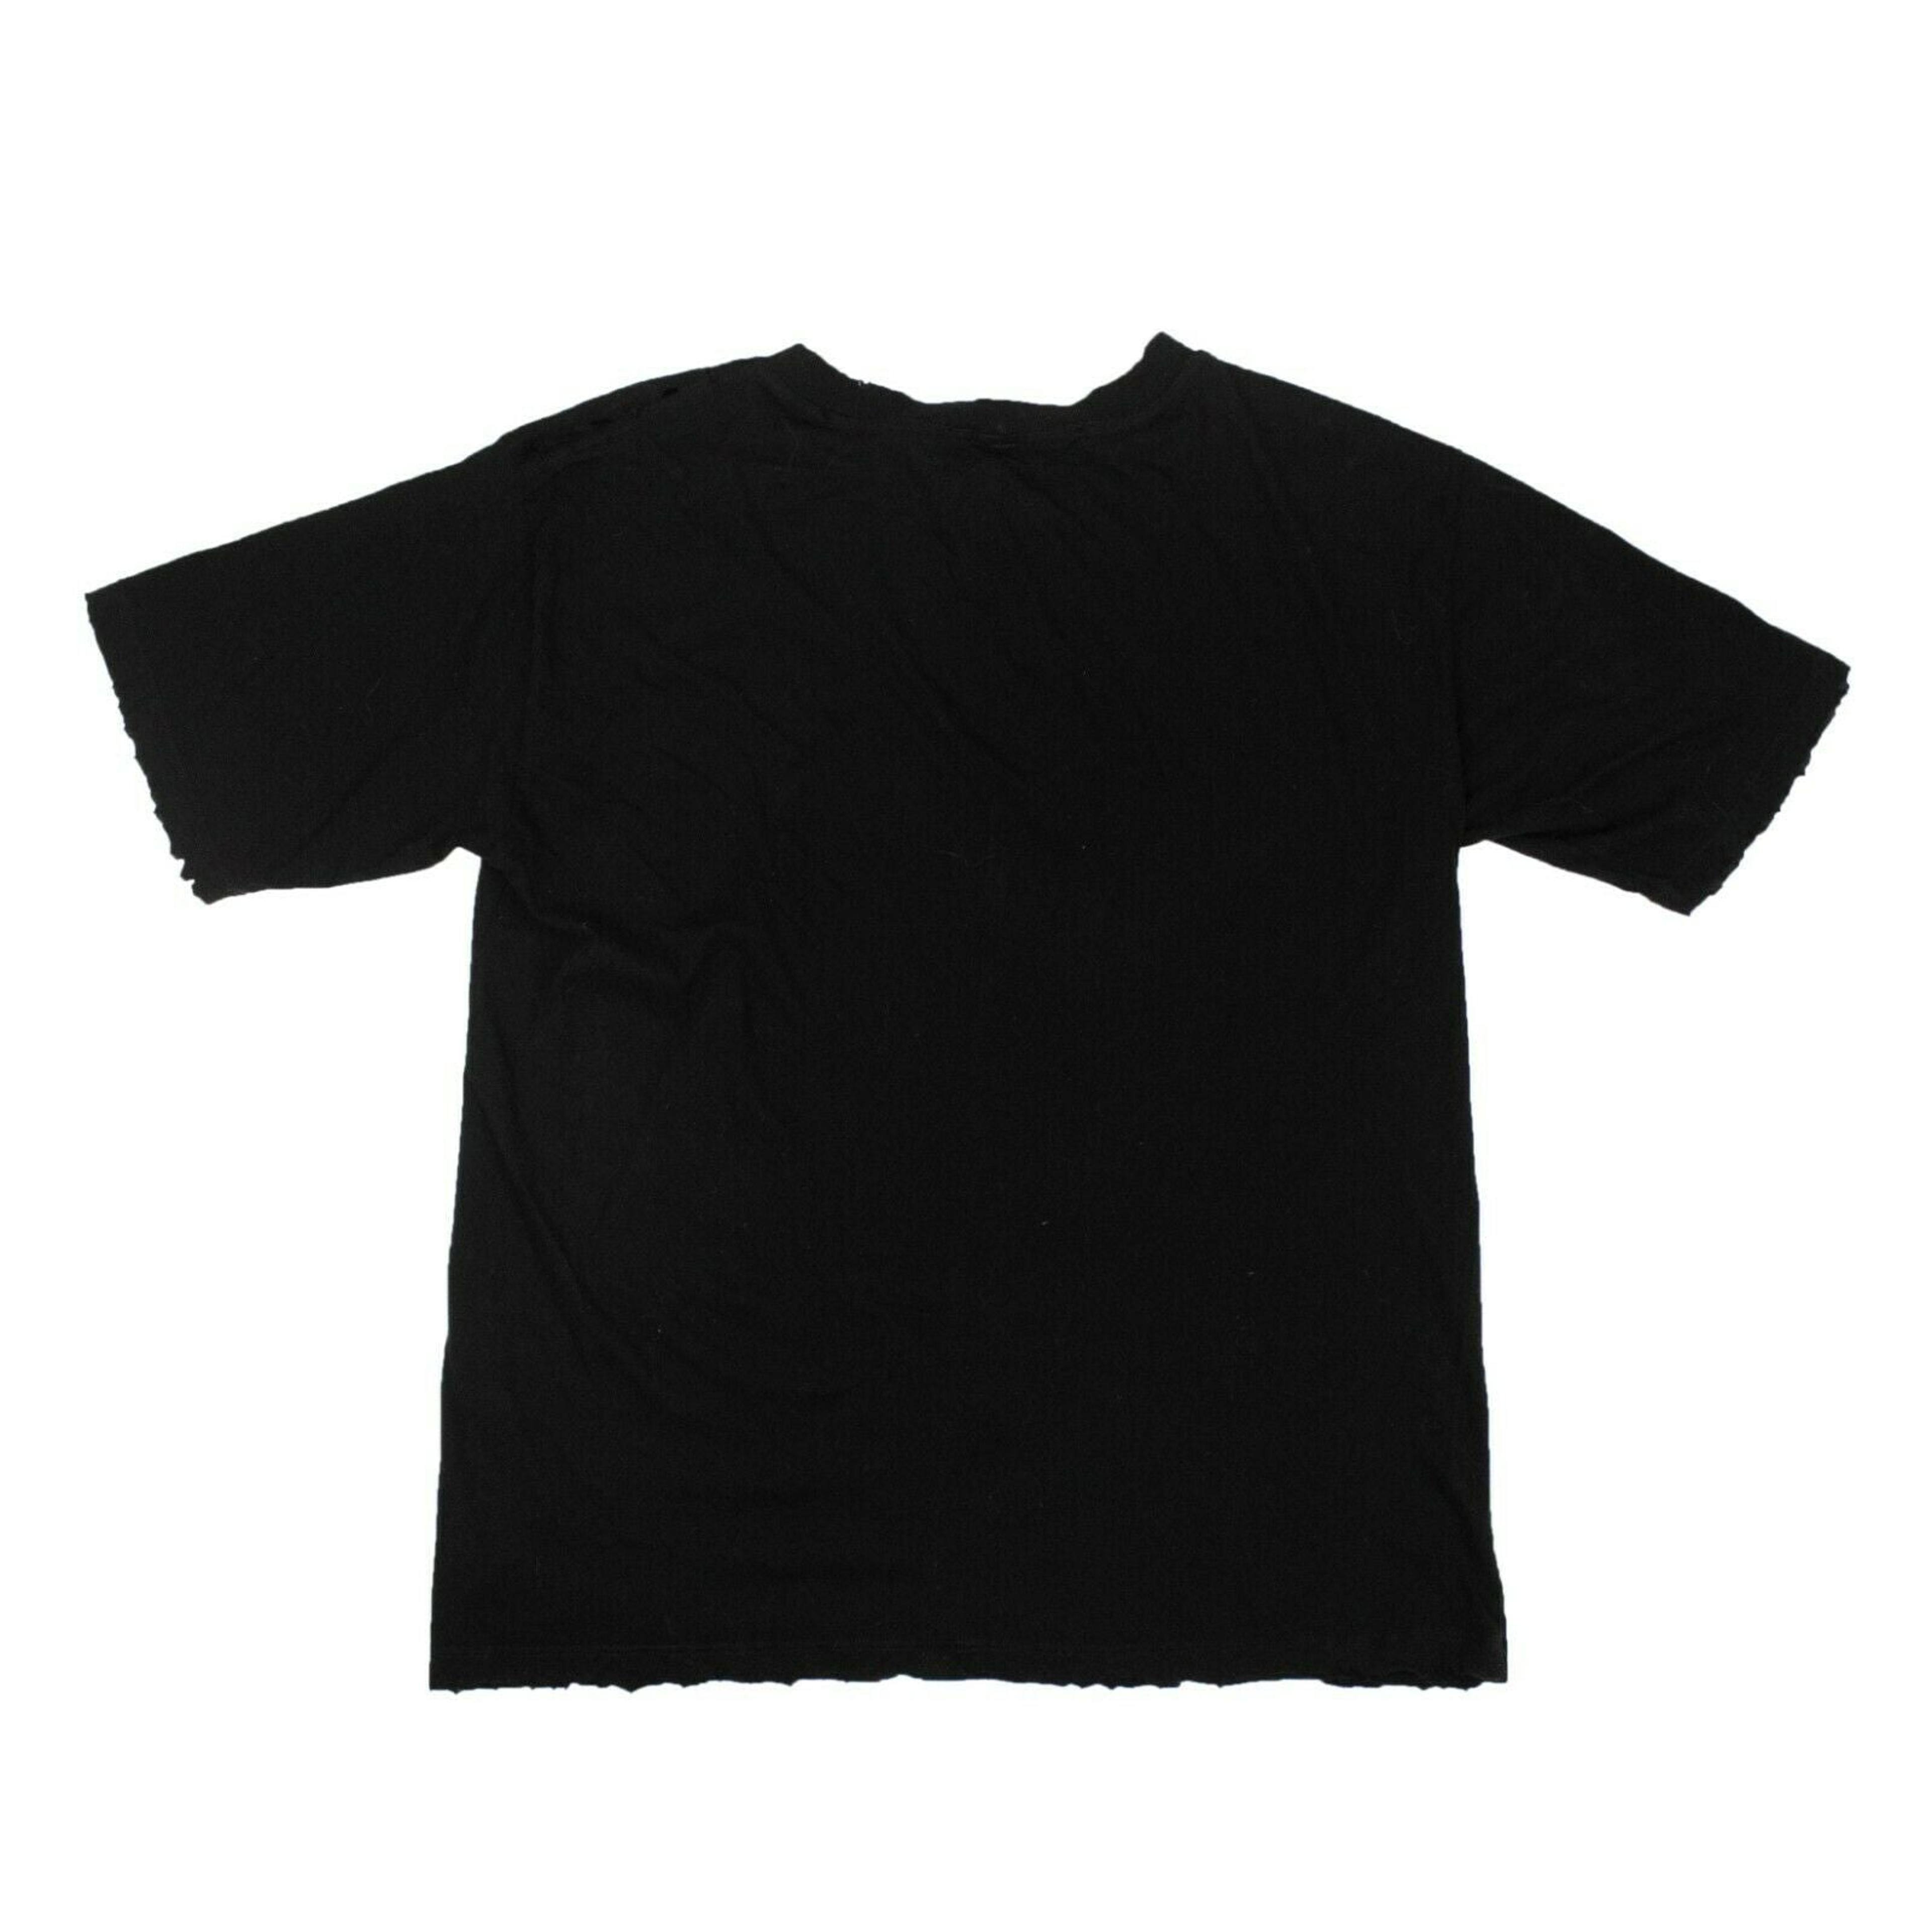 Alternate View 3 of Black Long Distressed T-Shirt